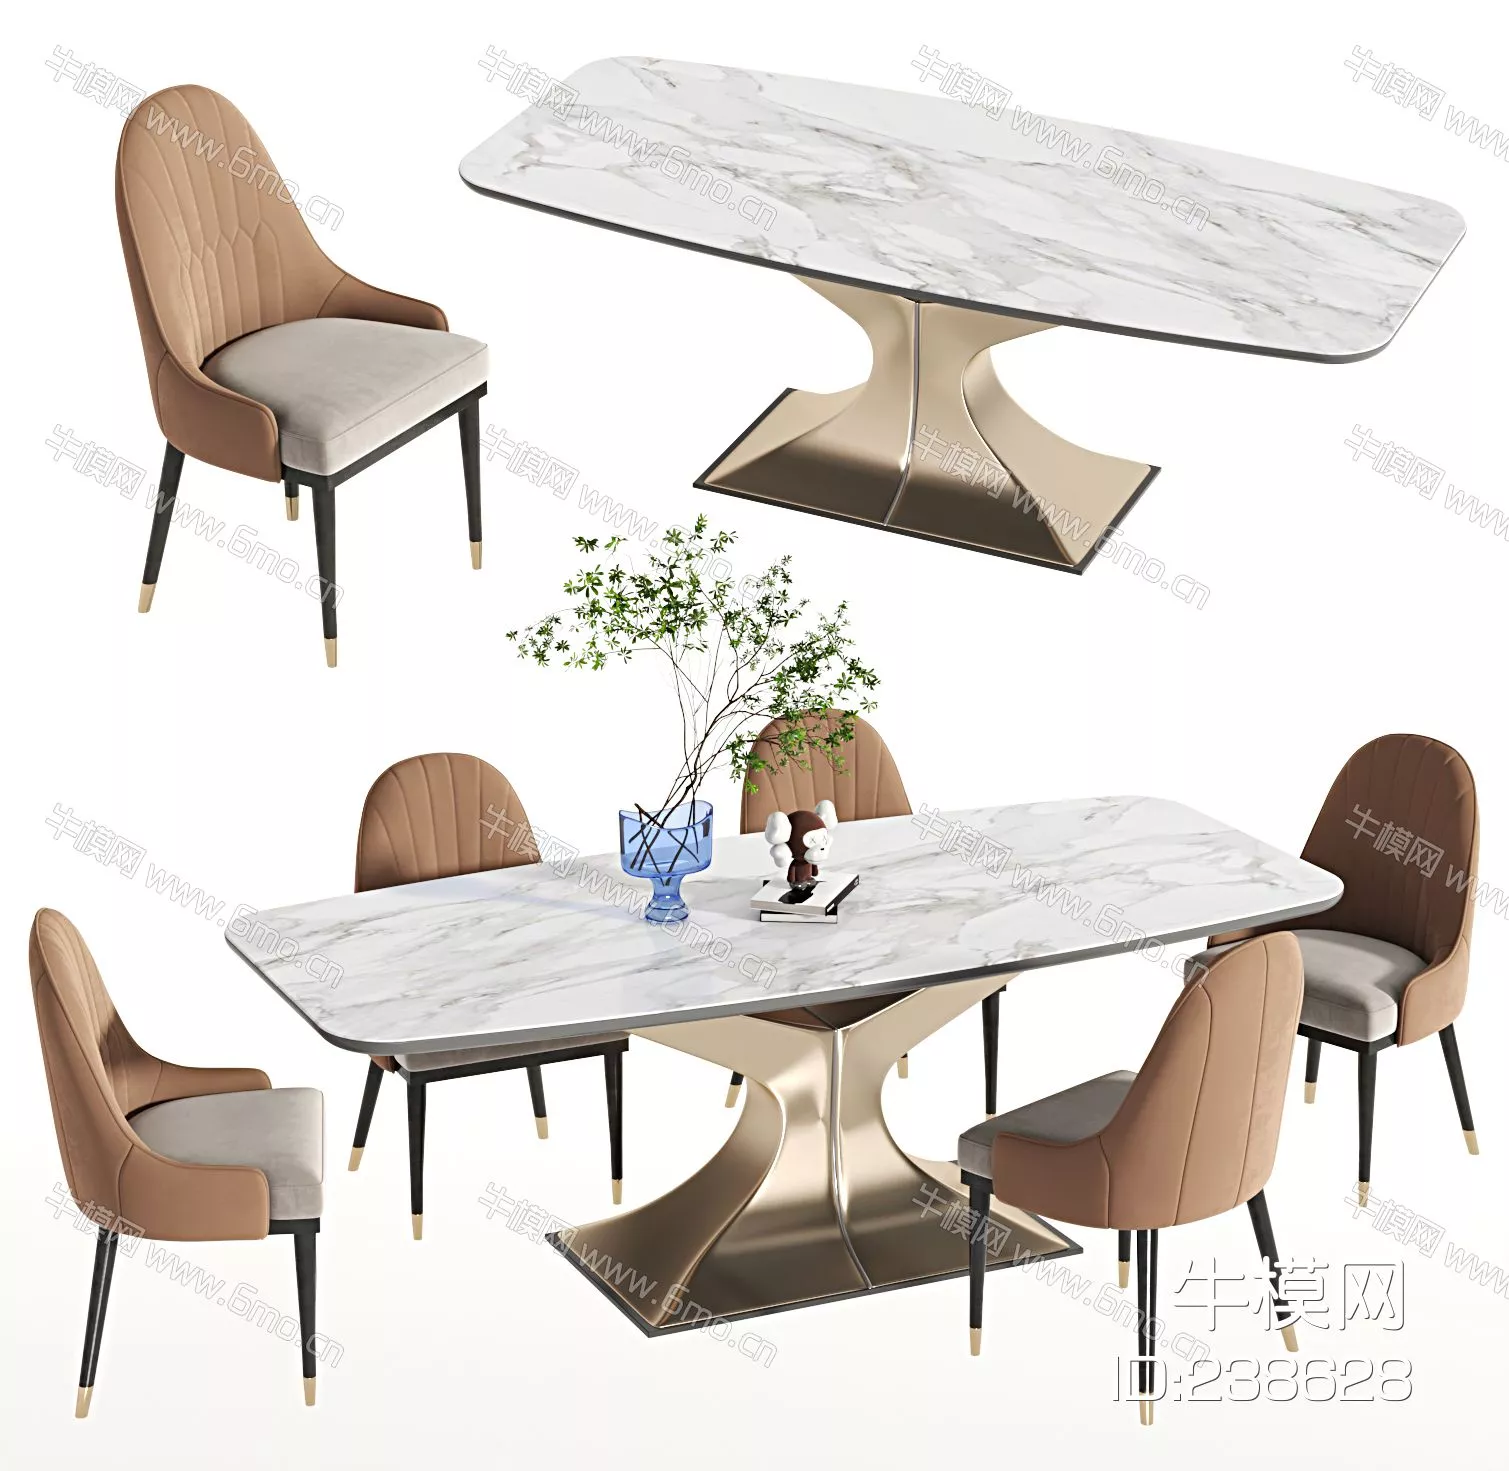 MODERN DINING TABLE SET - SKETCHUP 3D MODEL - VRAY - 238628